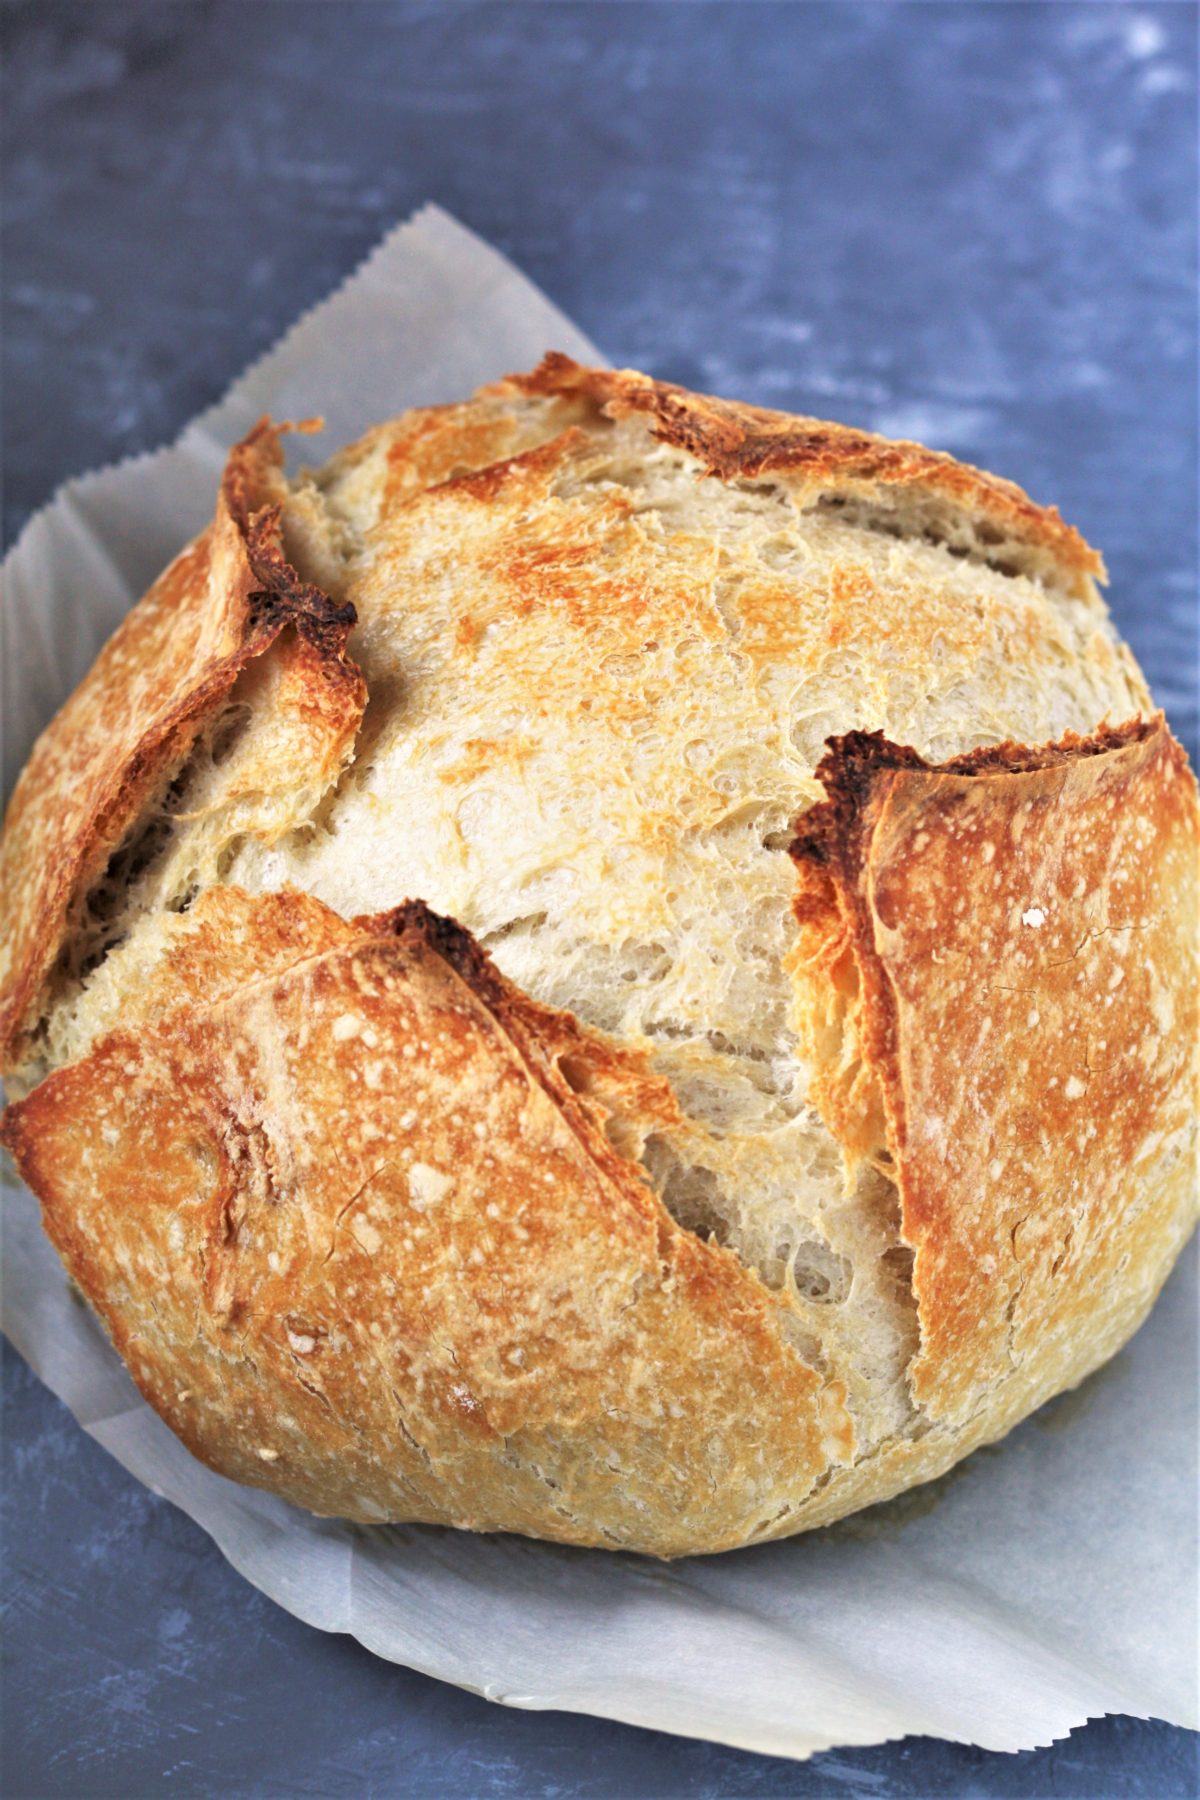 https://www.thetastybiteblog.com/wp-content/uploads/2020/07/easiest-no-knead-bread-3-scaled.jpg